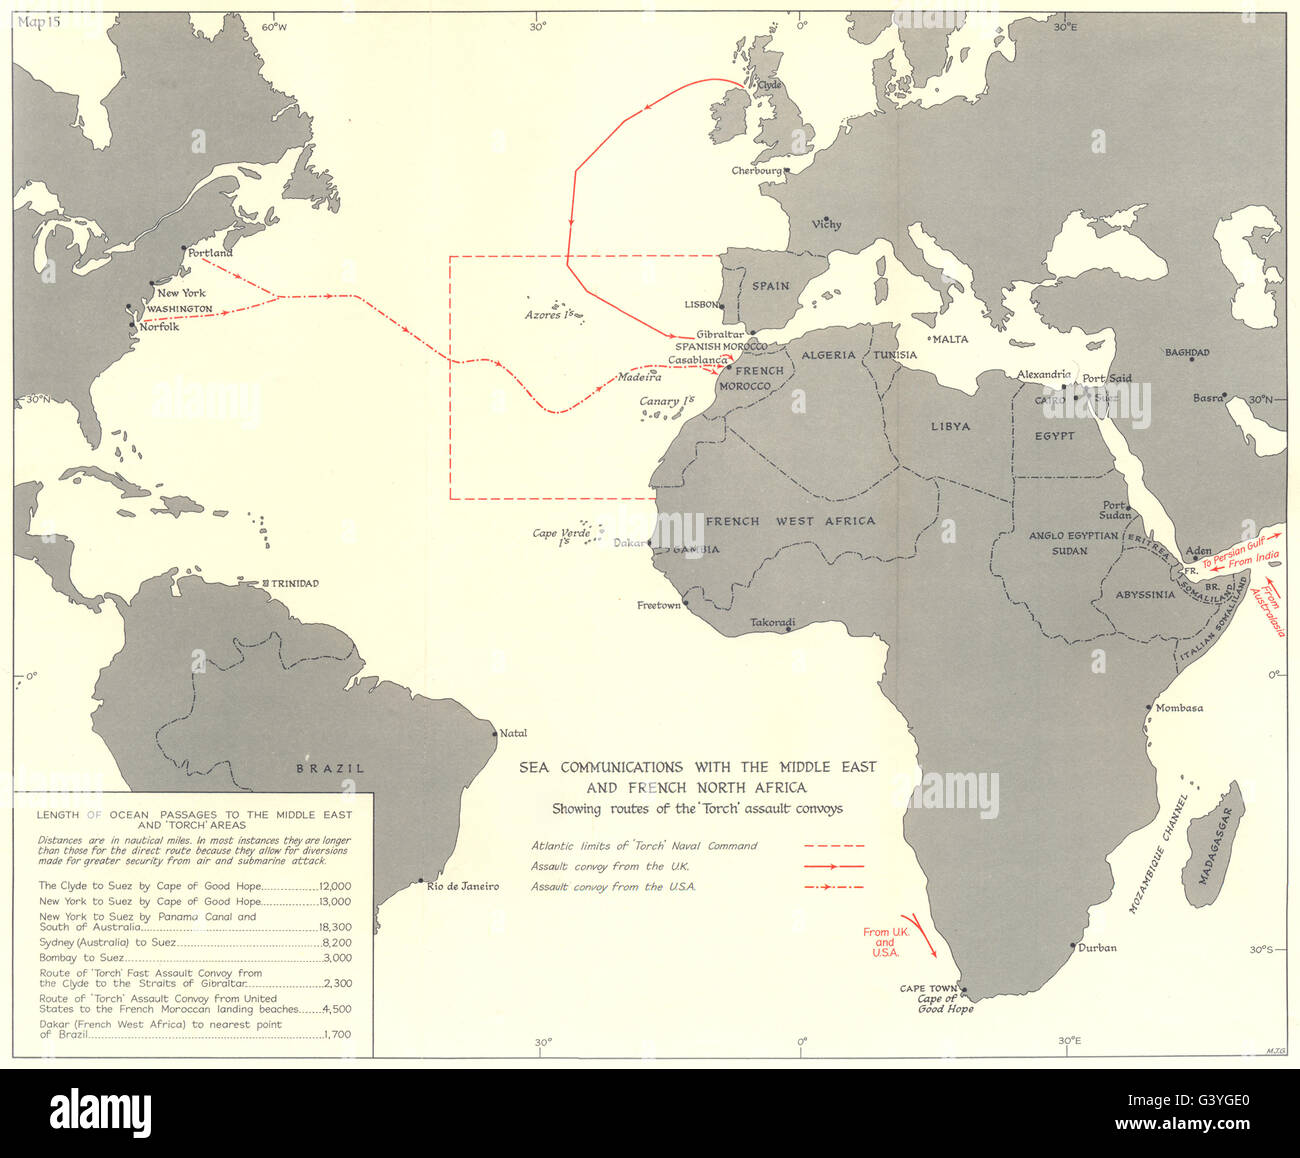 OPERATION TORCH: Sea Comms mittlerer E französische N Afrika; Angriff Konvoi Routenkarte 1966 Stockfoto